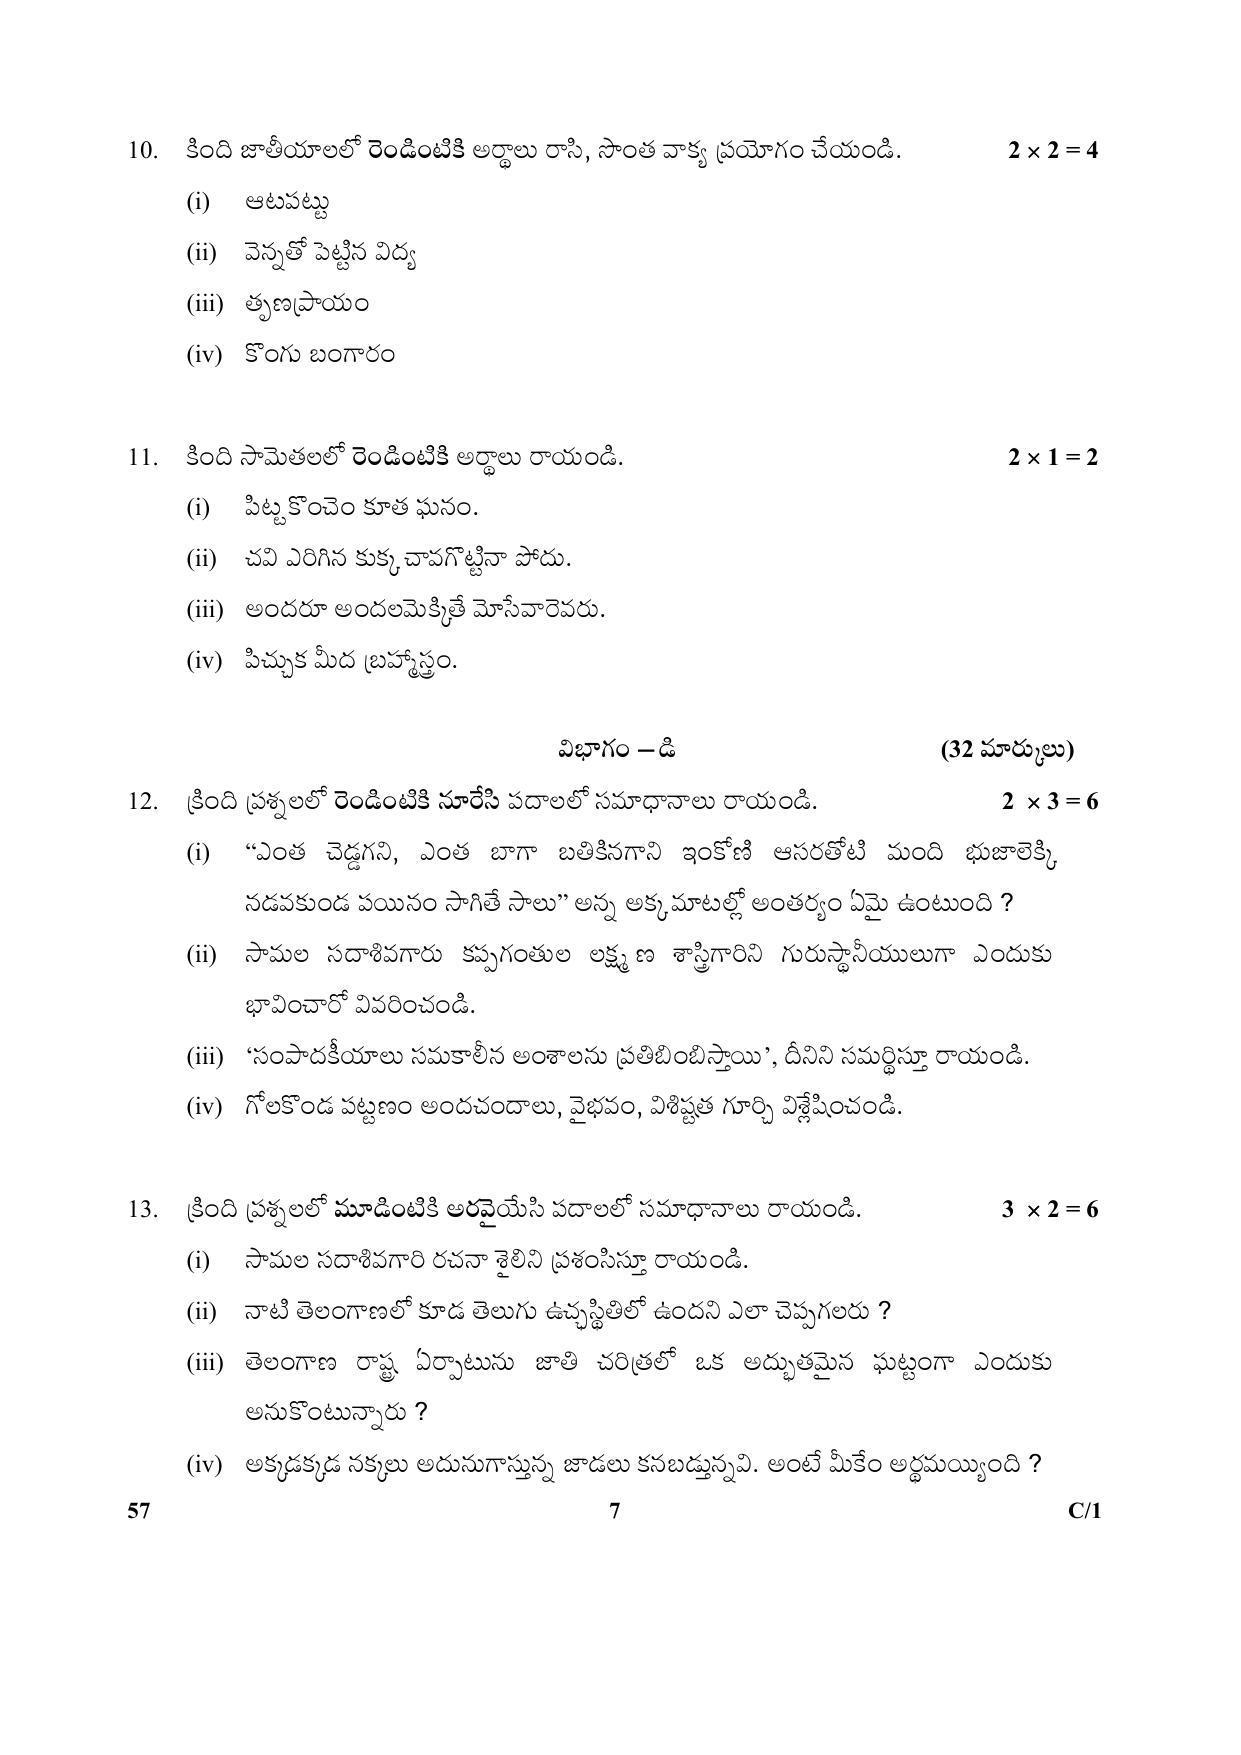 CBSE Class 10 57 (Telugu) 2018 Compartment Question Paper - Page 7